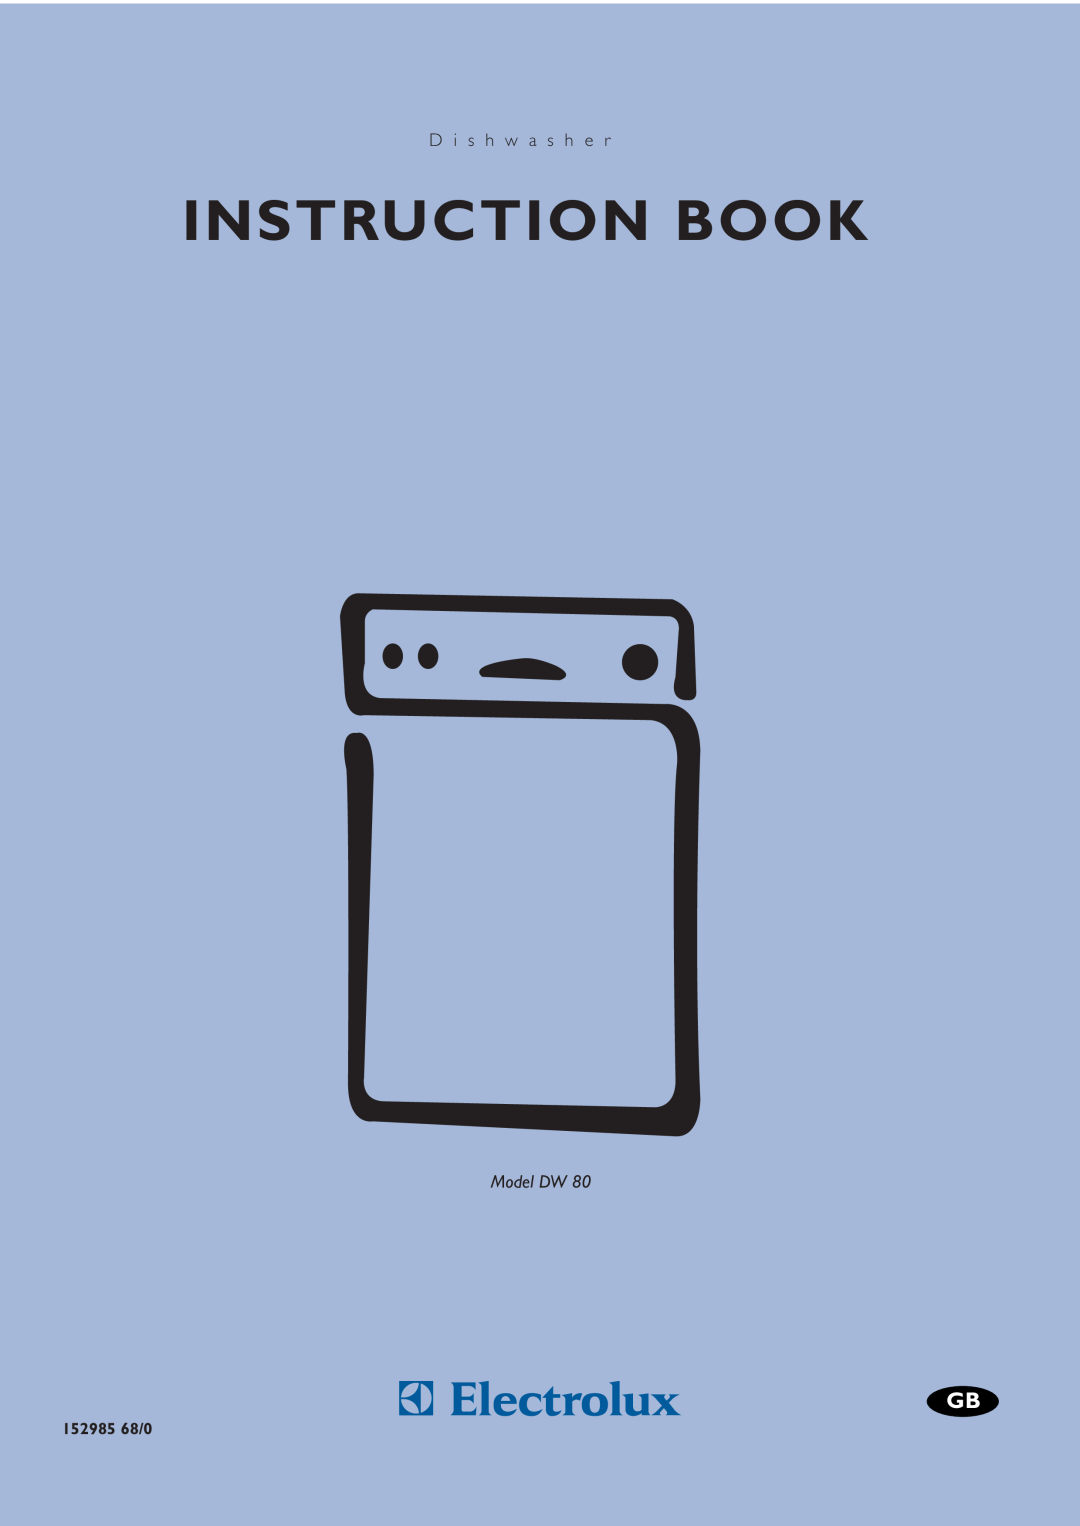 Electrolux DW 80 manual Instruction Book, D i s h w a s h e r, Model DW, 152985 68/0 